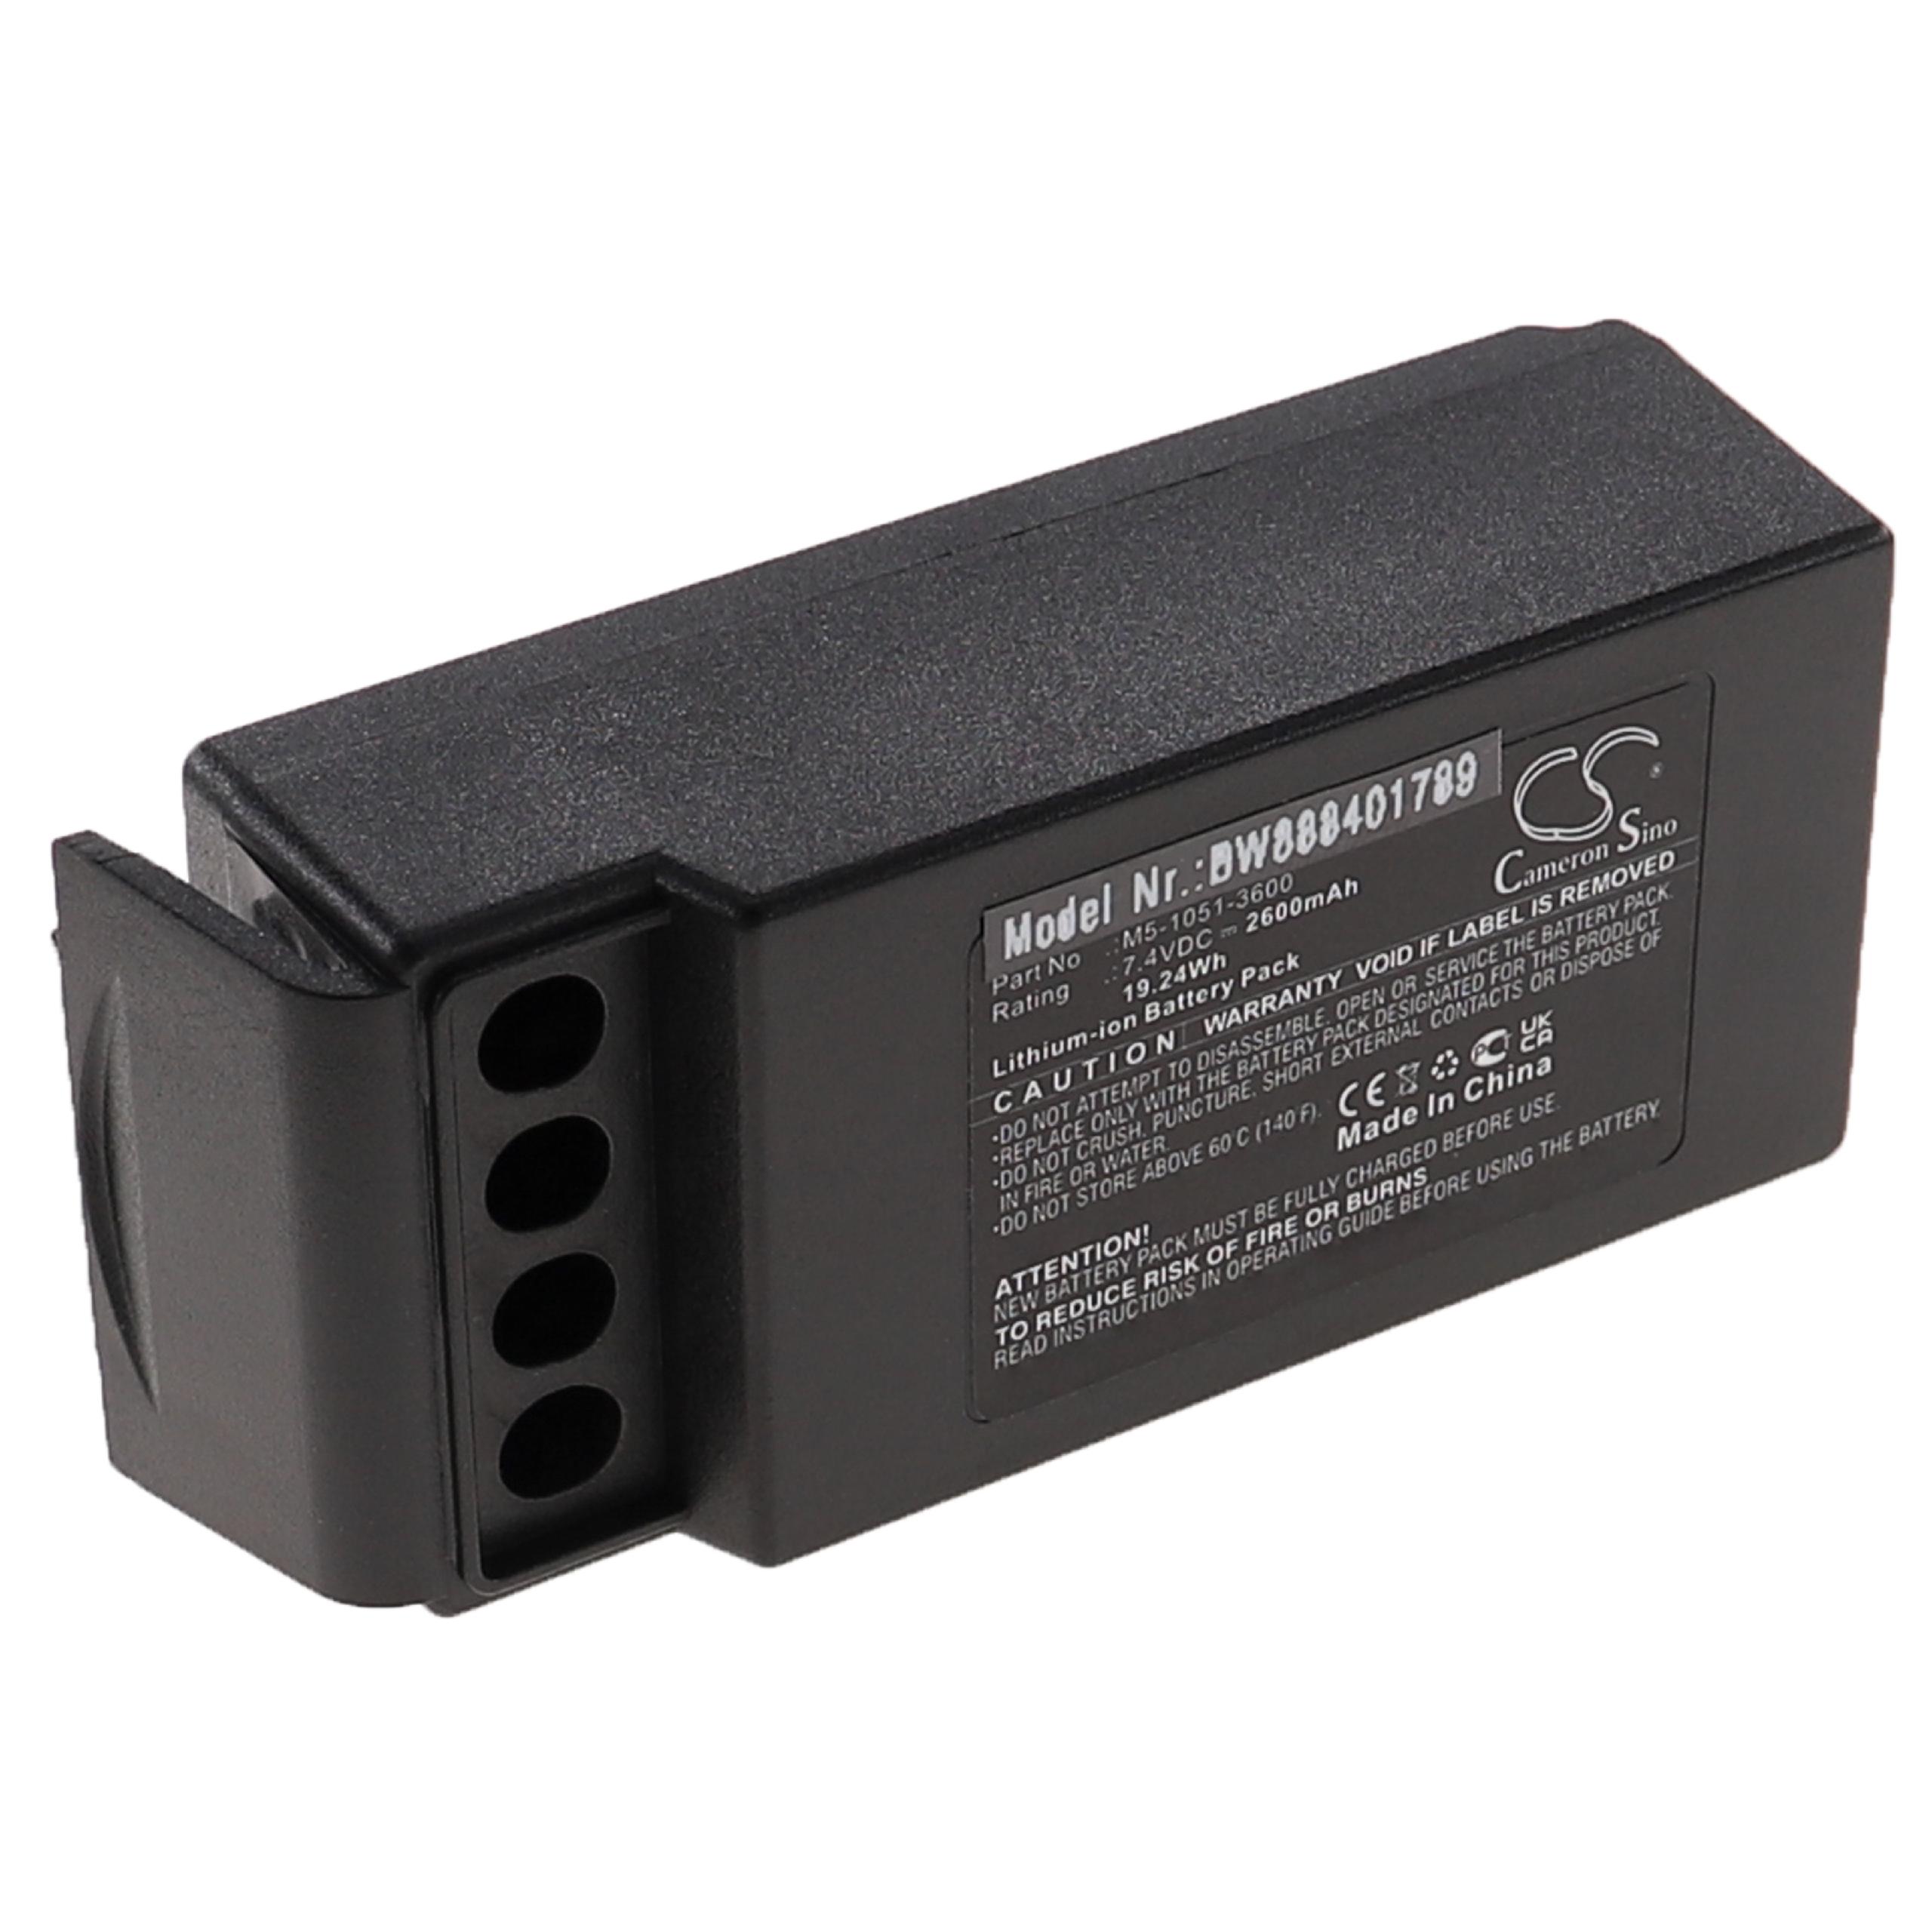 Akumulator do zdalnego sterowania zamiennik Cavotec M5-1051-3600 - 2600 mAh 7,4 V Li-Ion